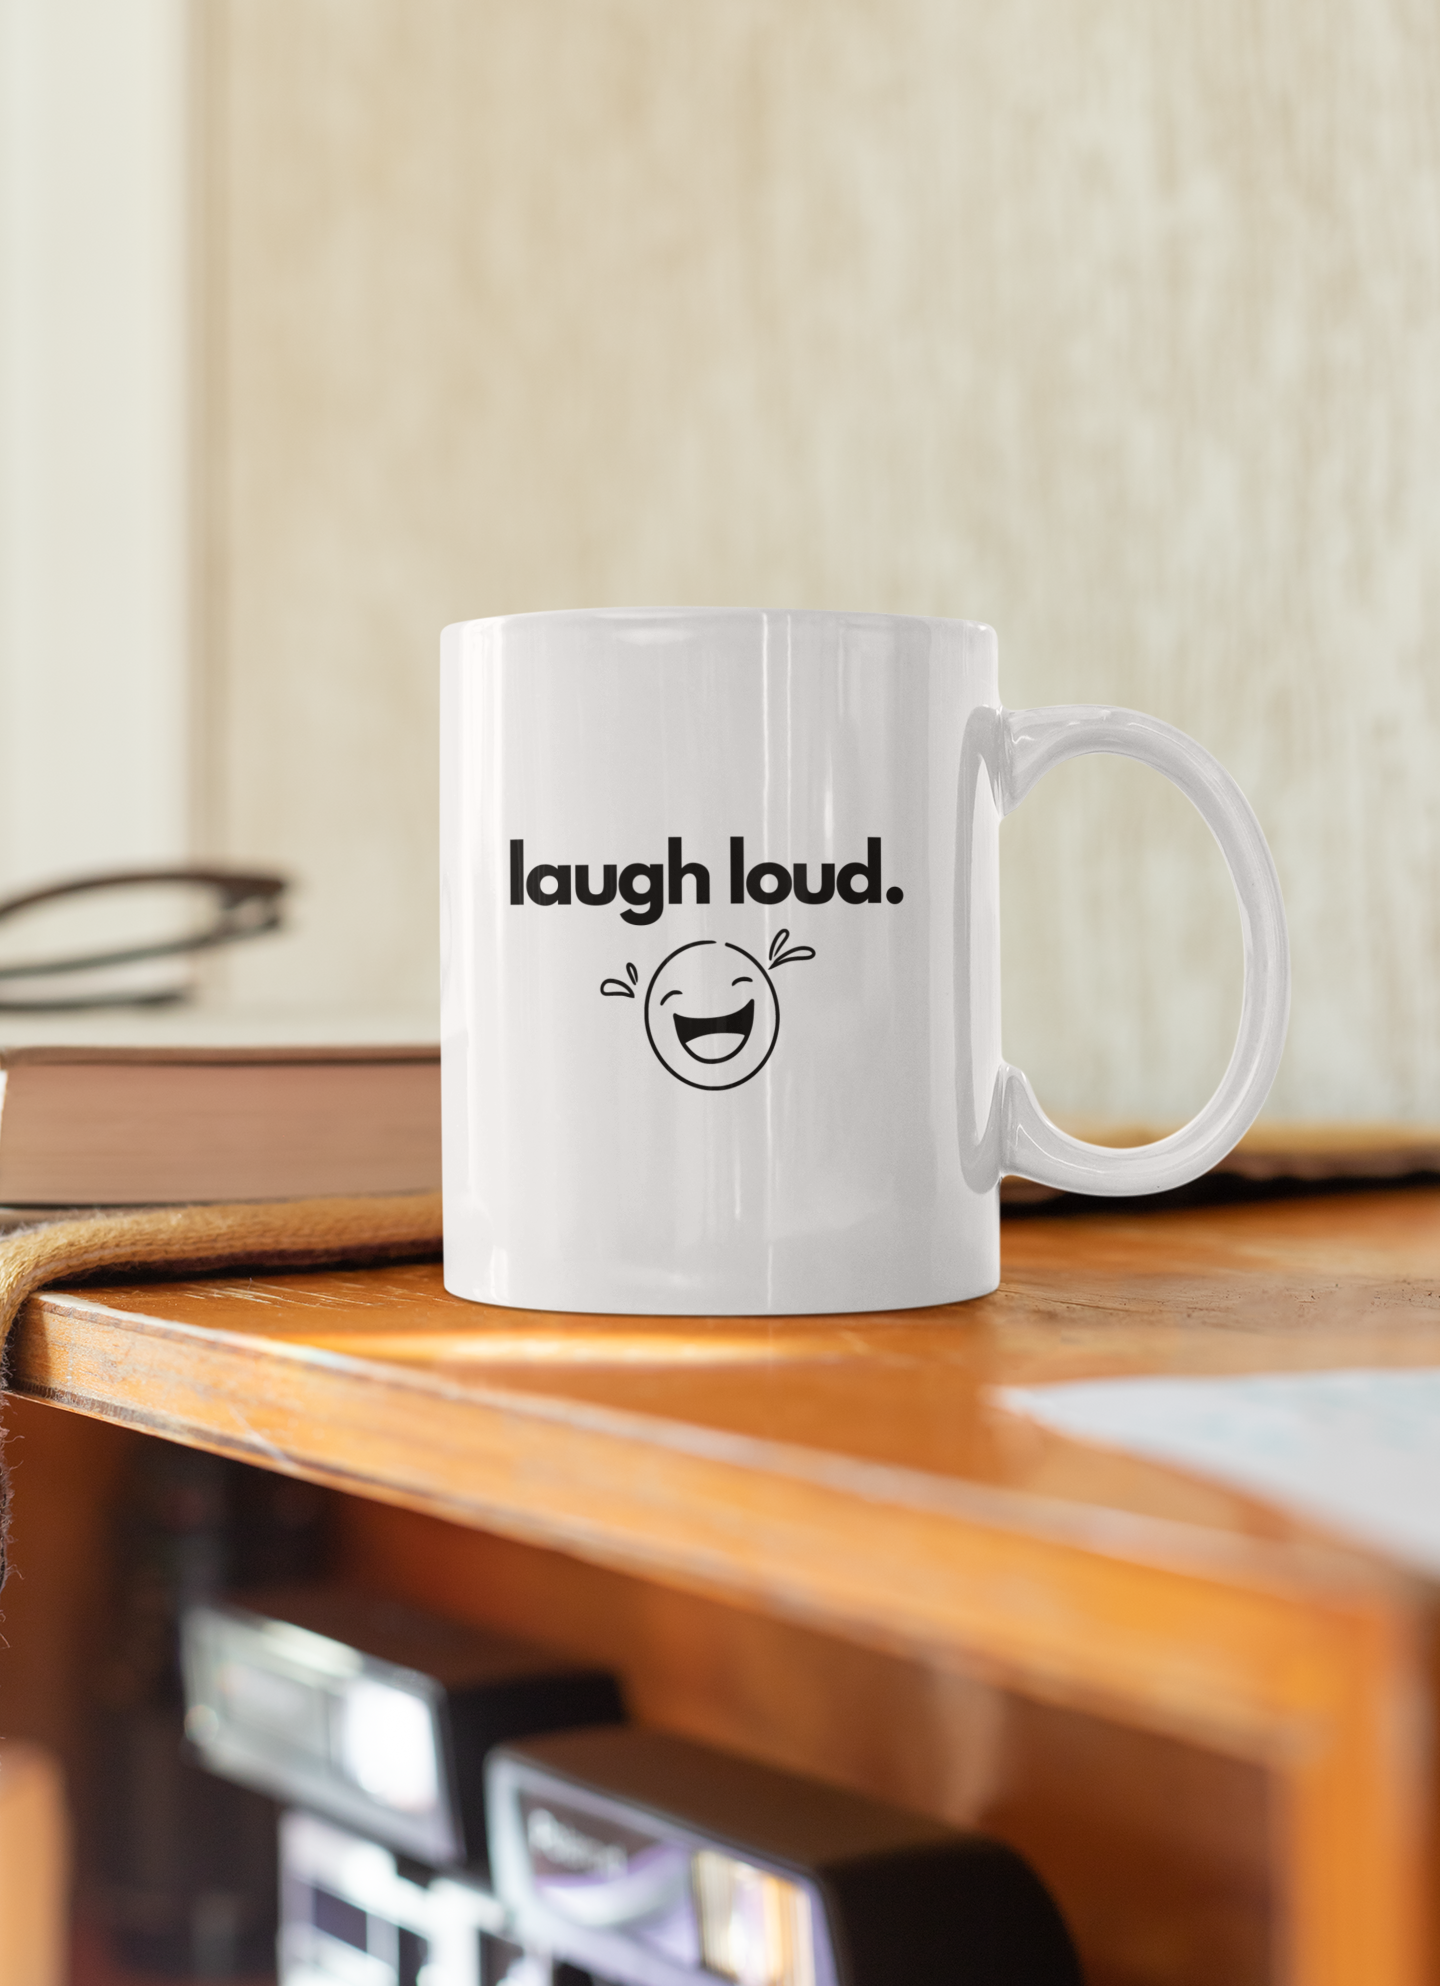 Laugh Loud Ceramic Coffee Mug 11oz